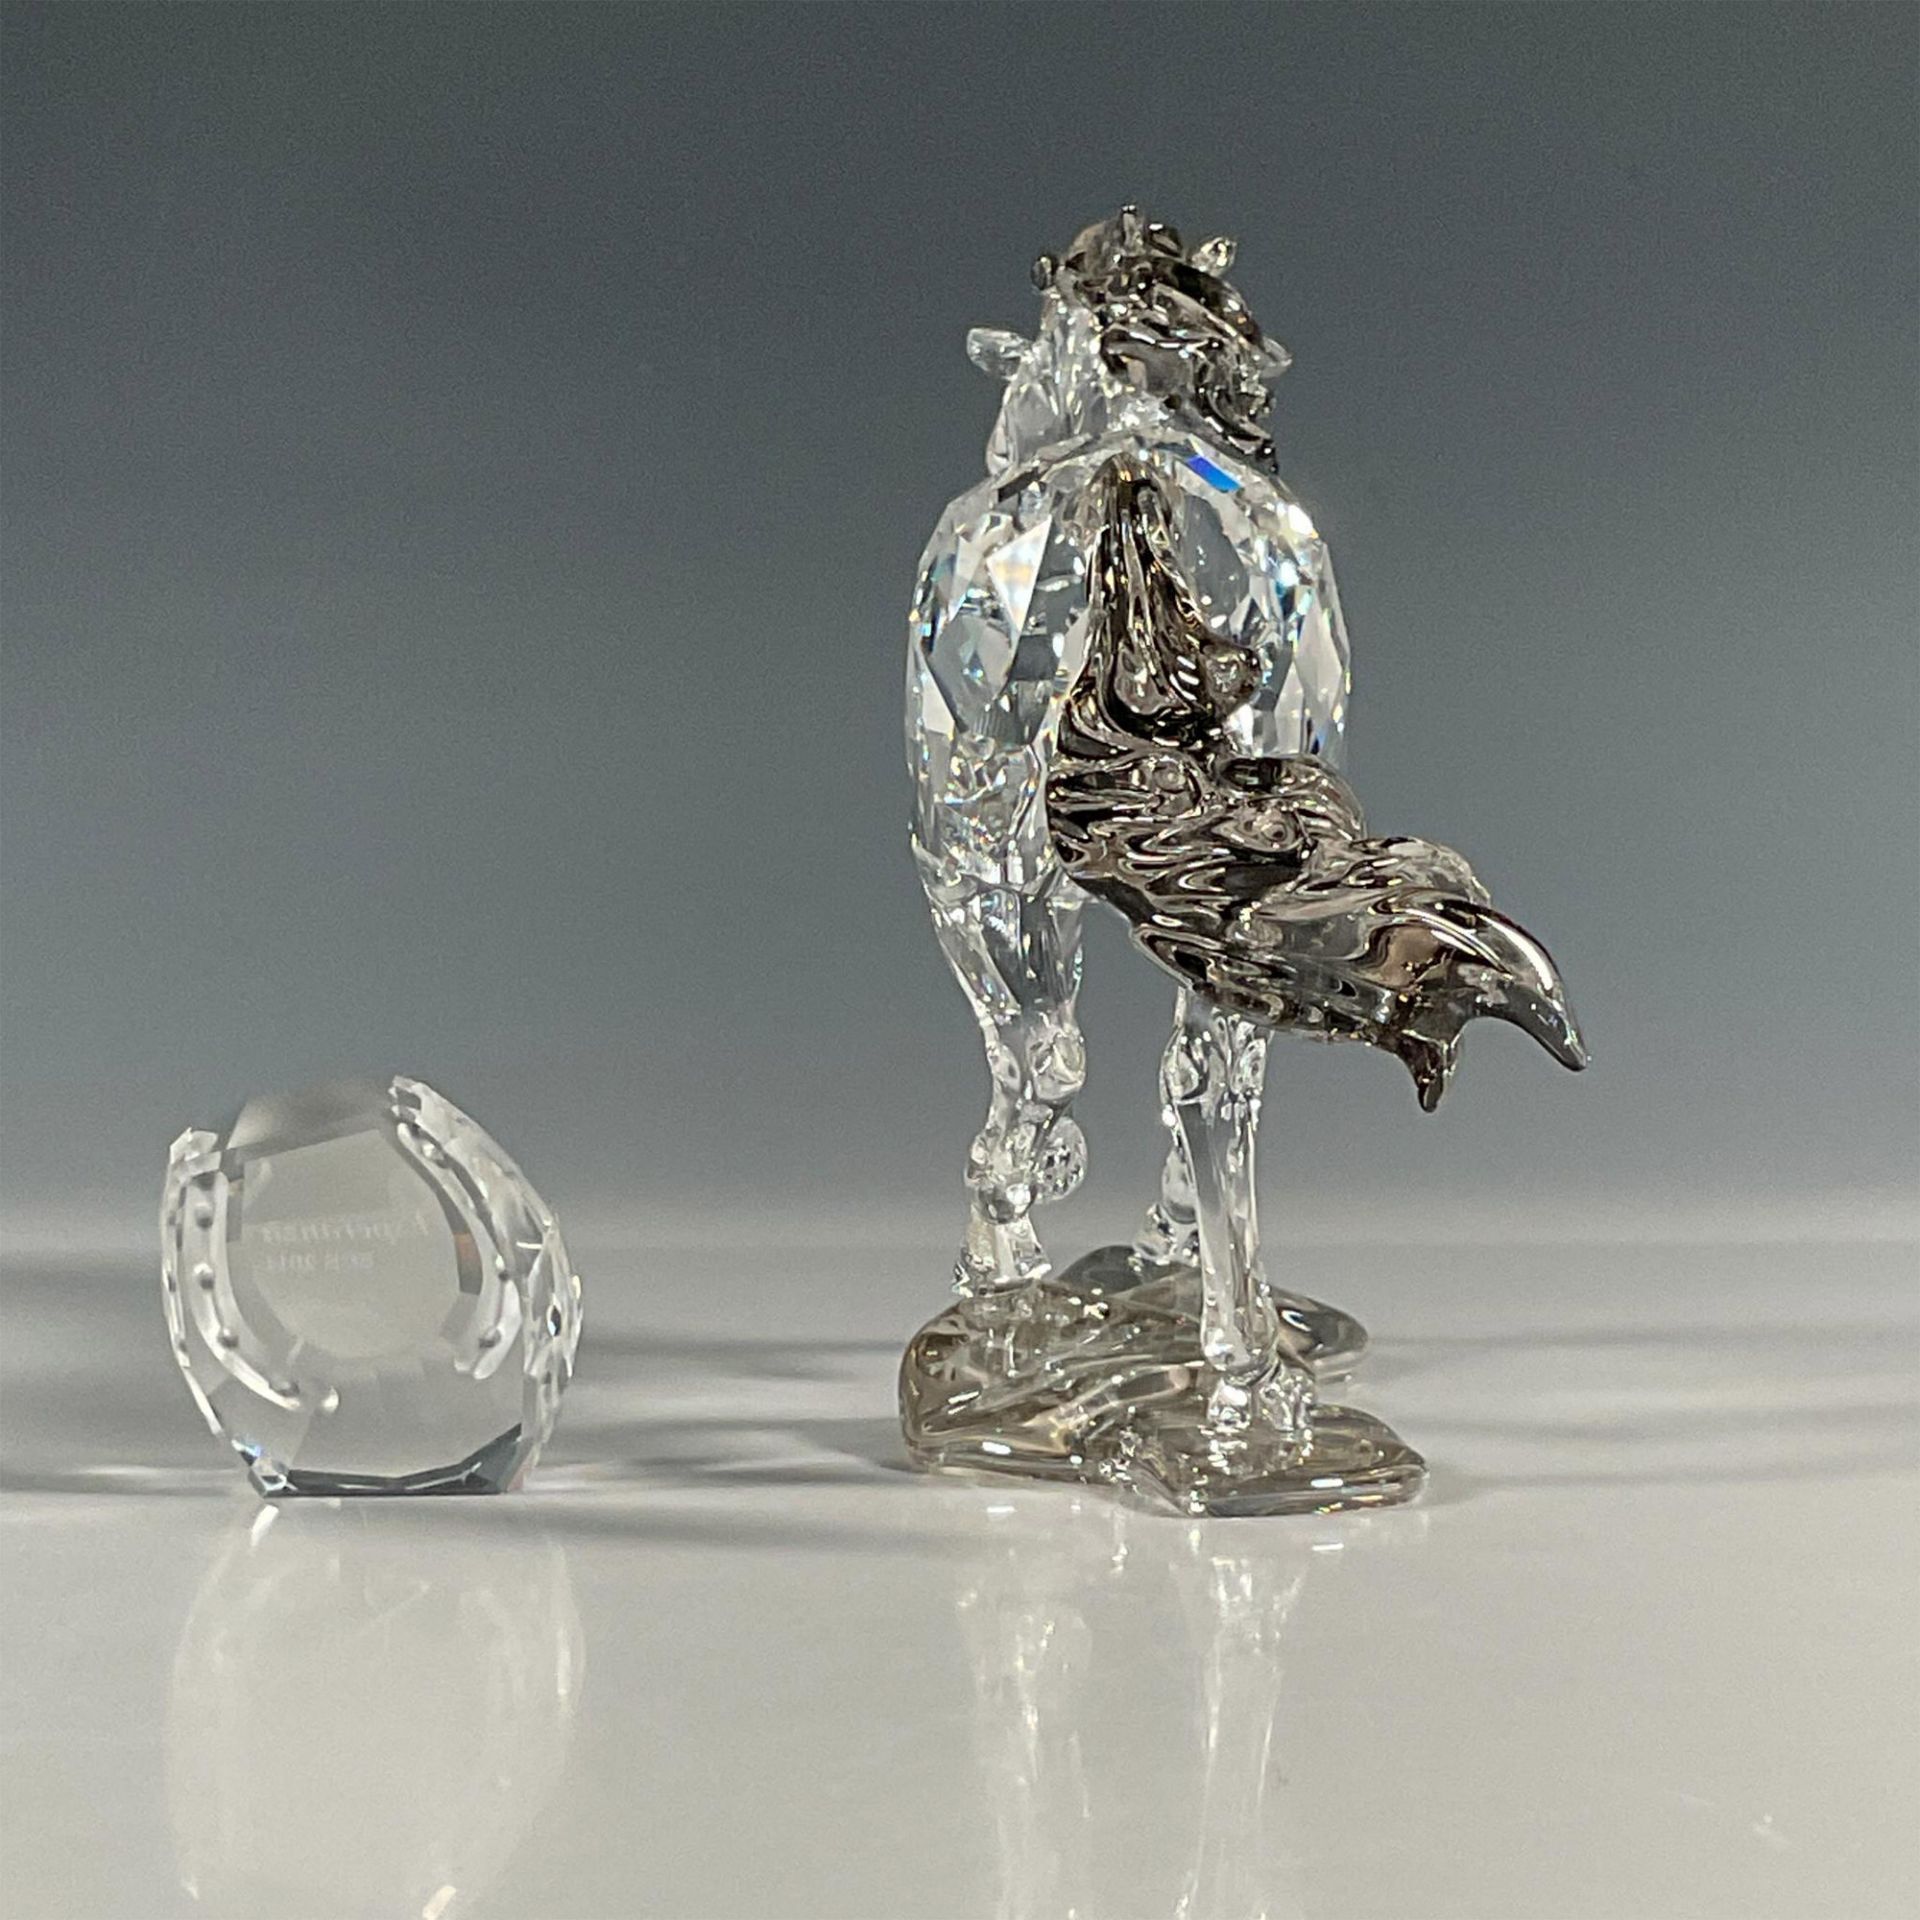 Swarovski Crystal Figurine with Plaque, Esperanza - Image 3 of 6